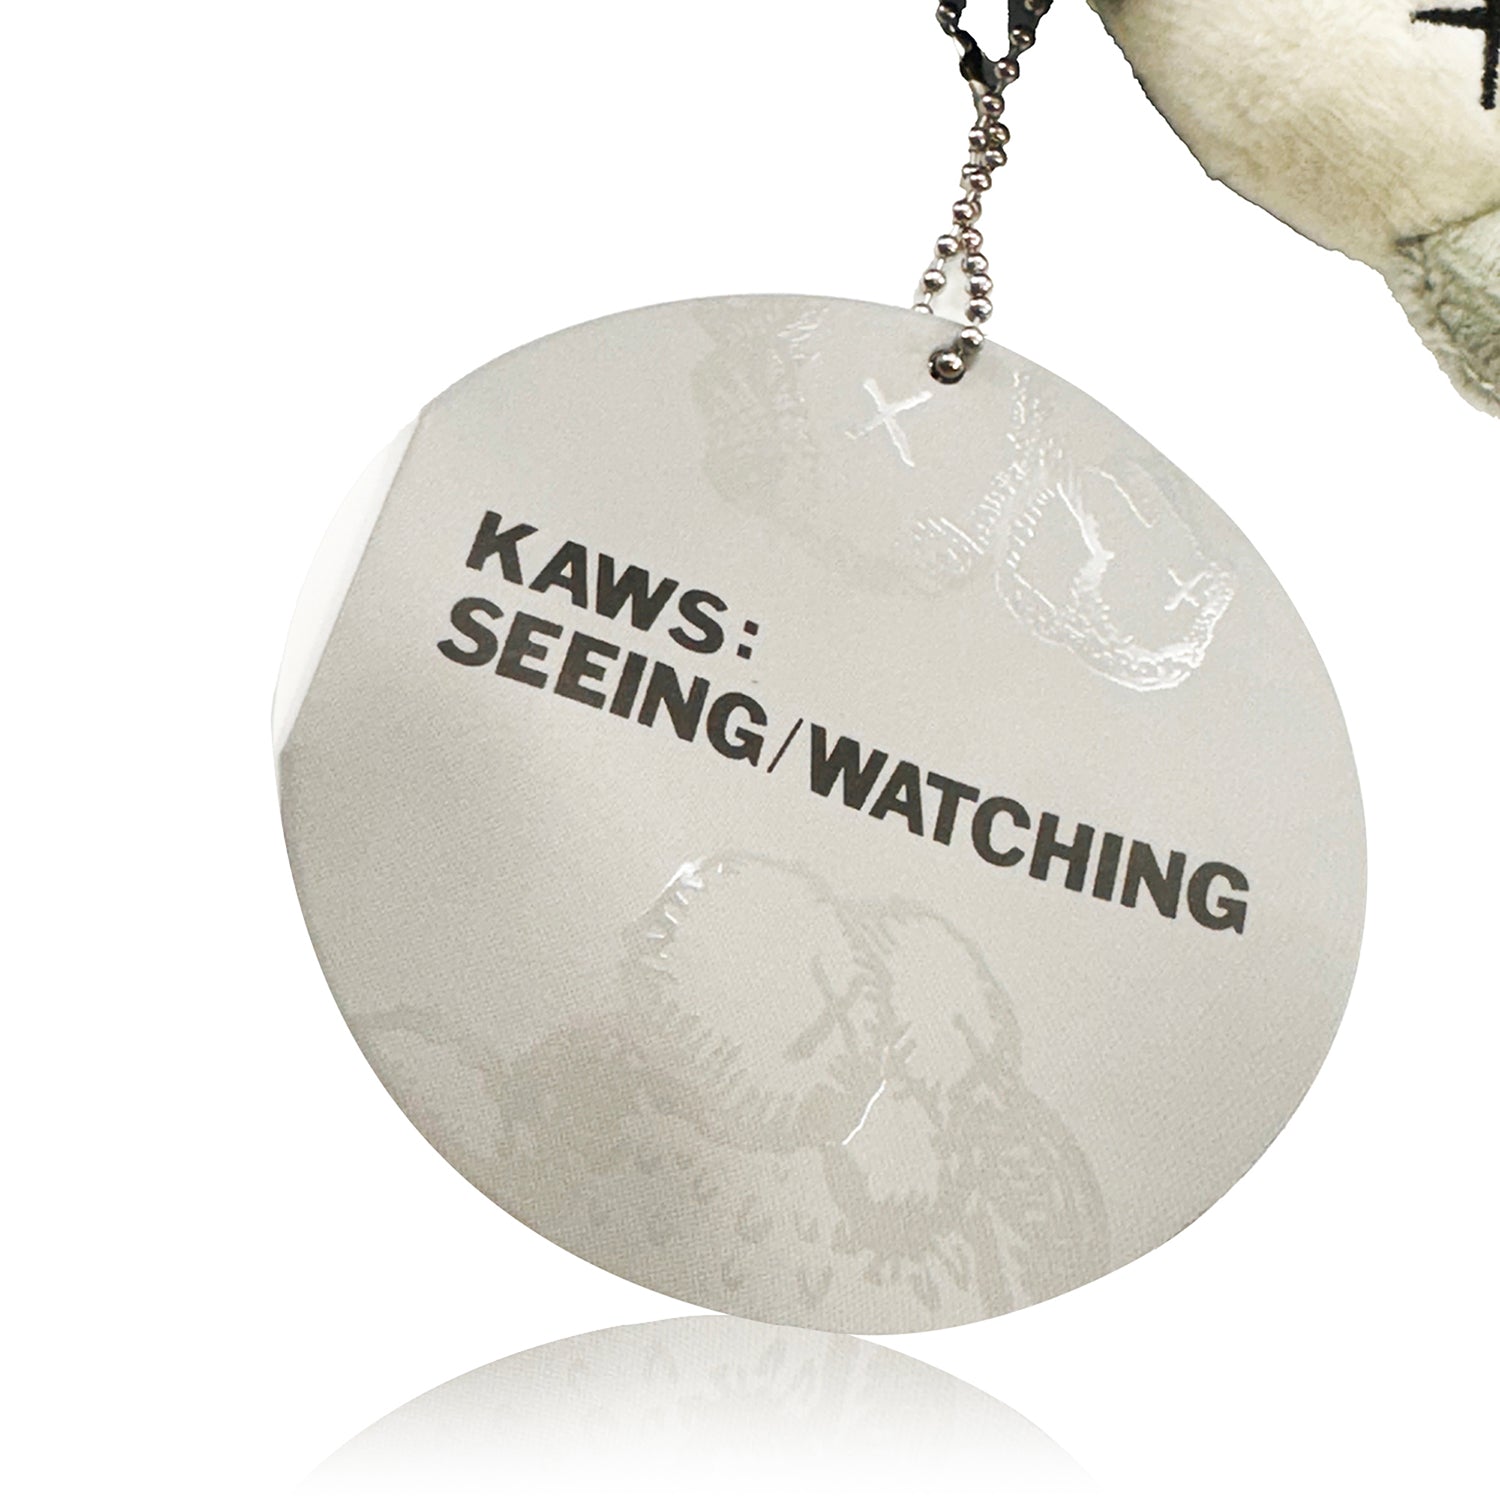 KAWS 'Seeing/Watching' (2018) Plush Keychain Figure Set | Signari 